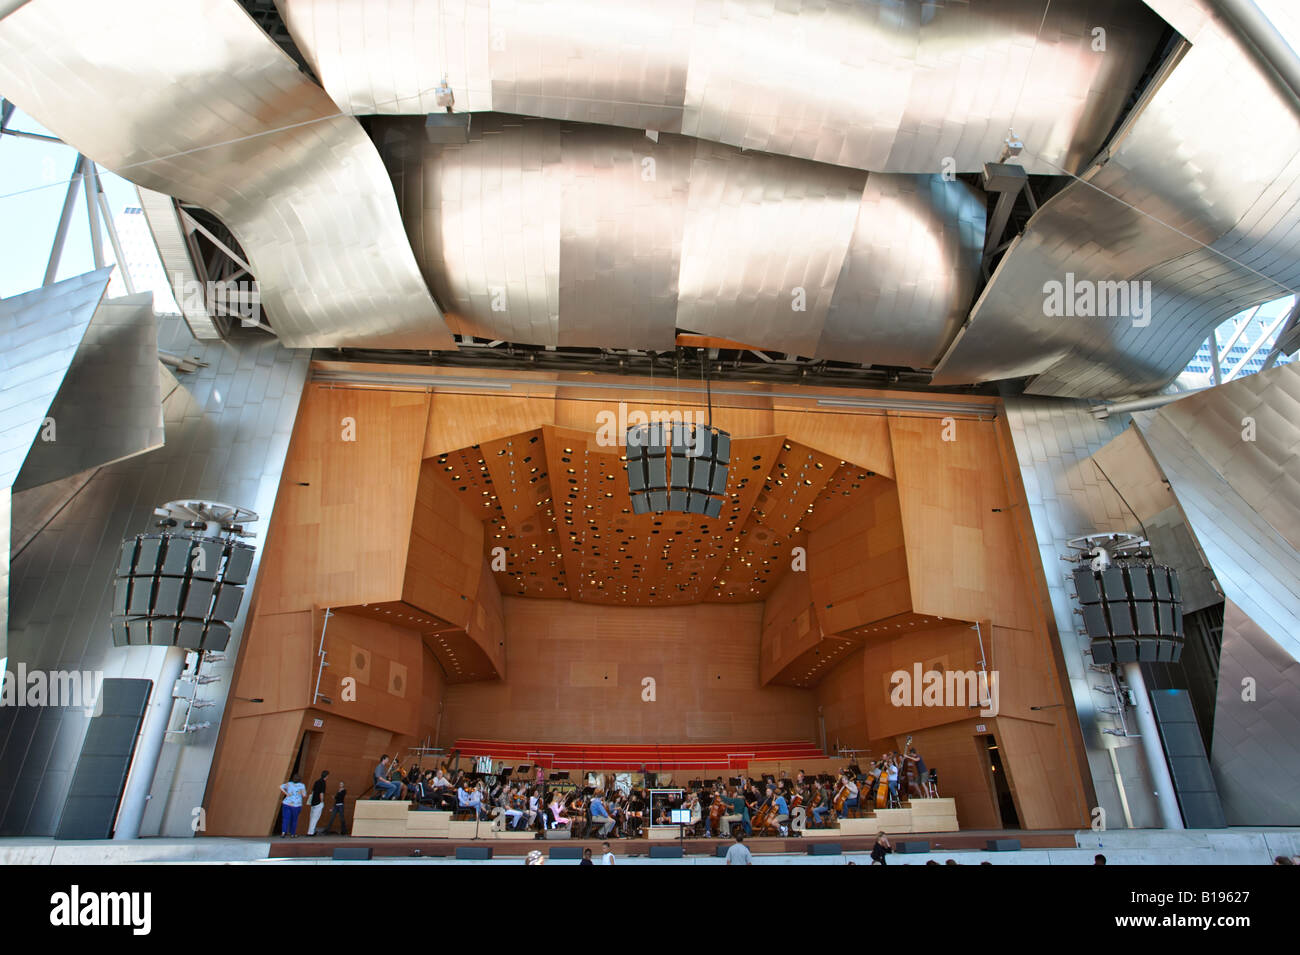 ILLINOIS Chicago Pritzker Pavilion architettura moderna Frank Gehry curvatura dei pannelli di acciaio il Millennium Park stage Foto Stock